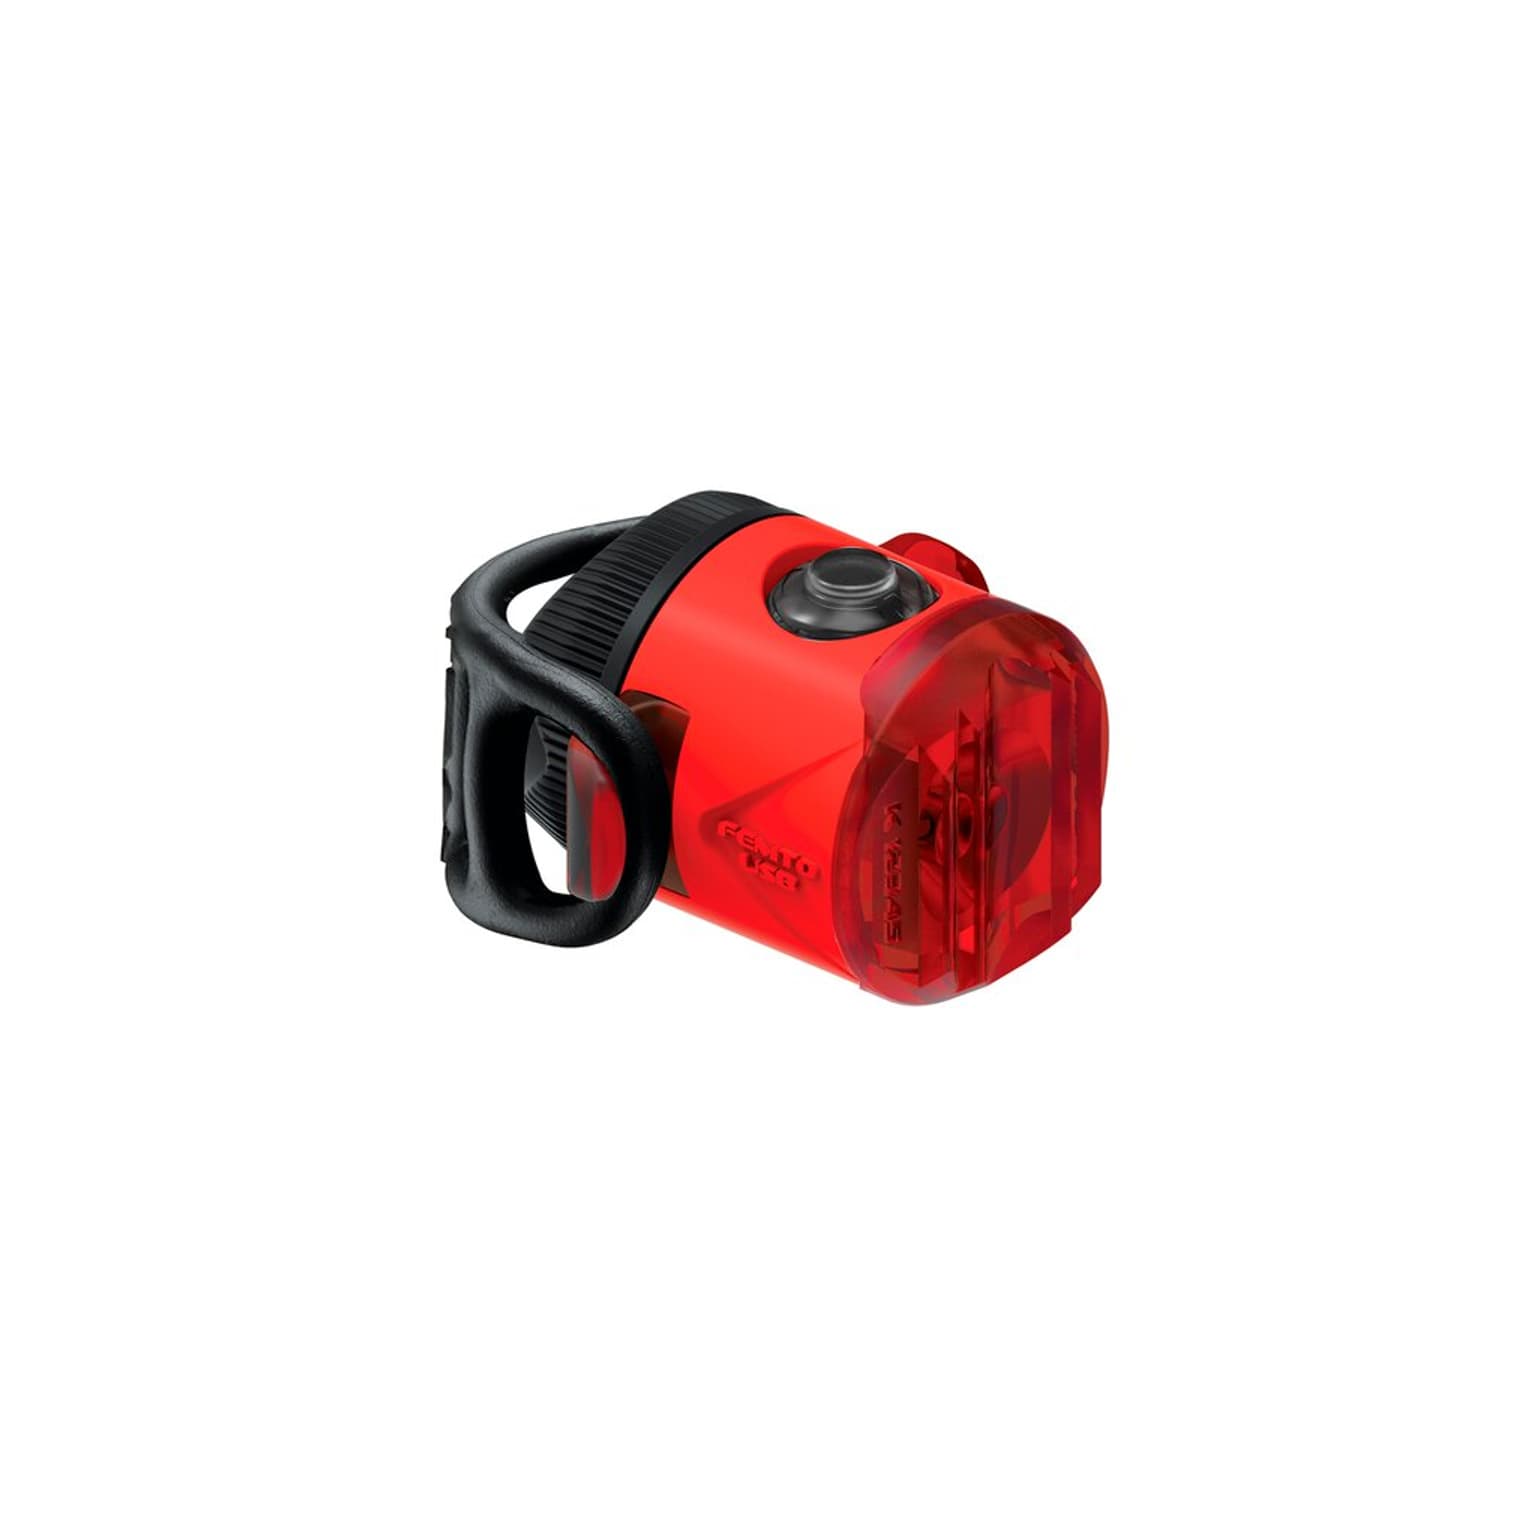 Lezyne Lezyne Femto USB Drive Rear Éclairage pour vélo rouge 1